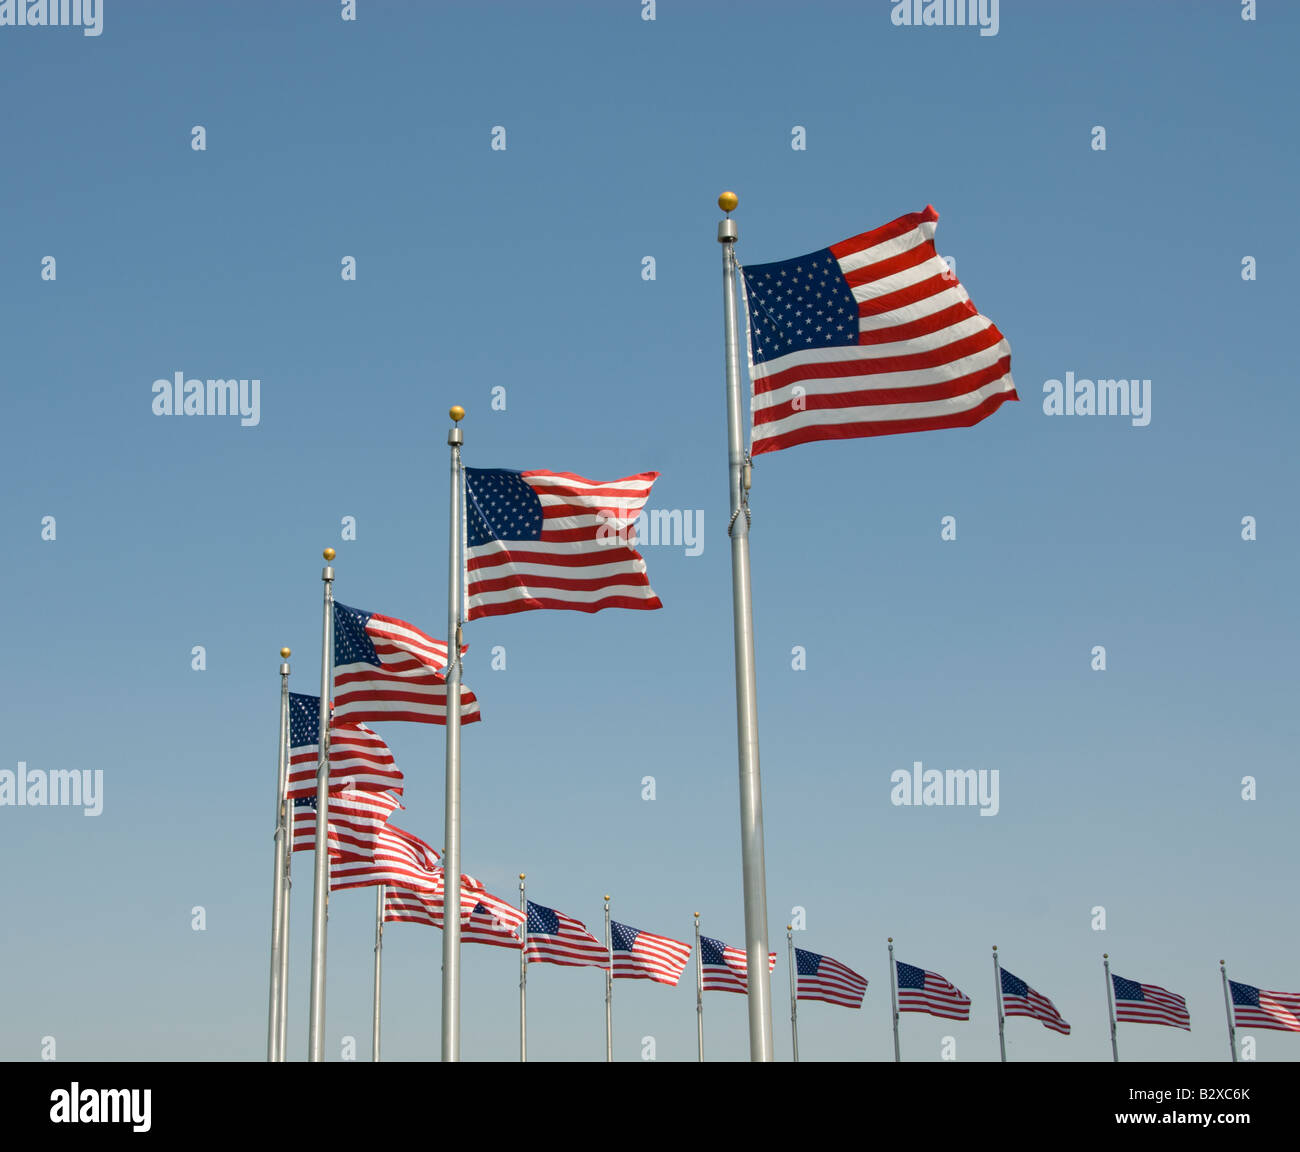 Washington DC USA amerikanische Flaggen am Washington Monument. Foto copyright Lee Foster Foto 2 washdc82289 Stockfoto